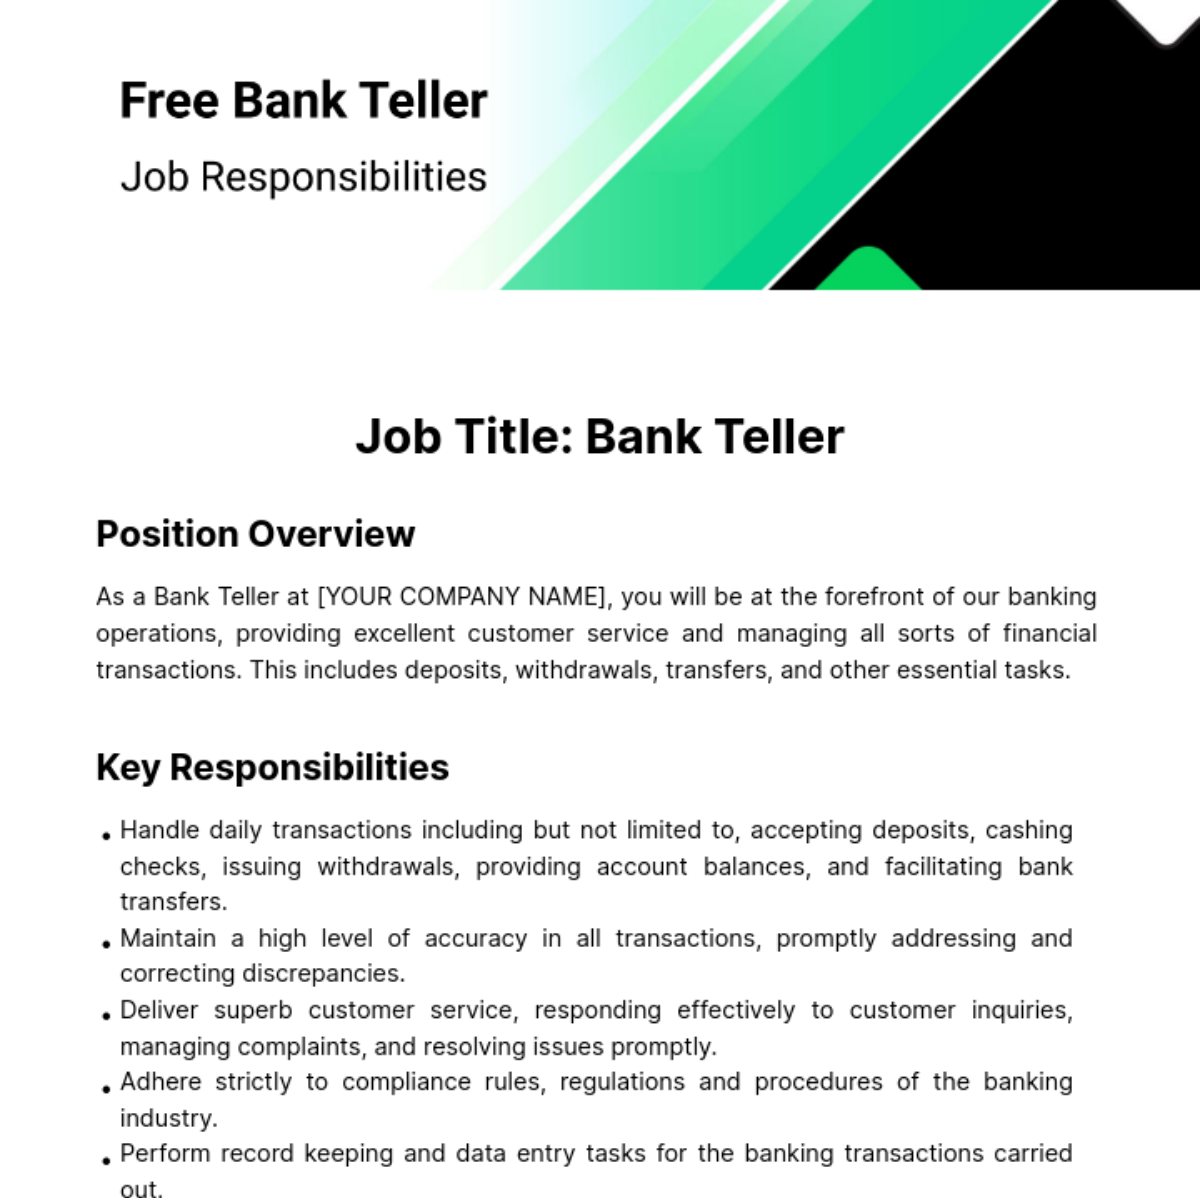 Free Bank Teller Job Responsibilities Template